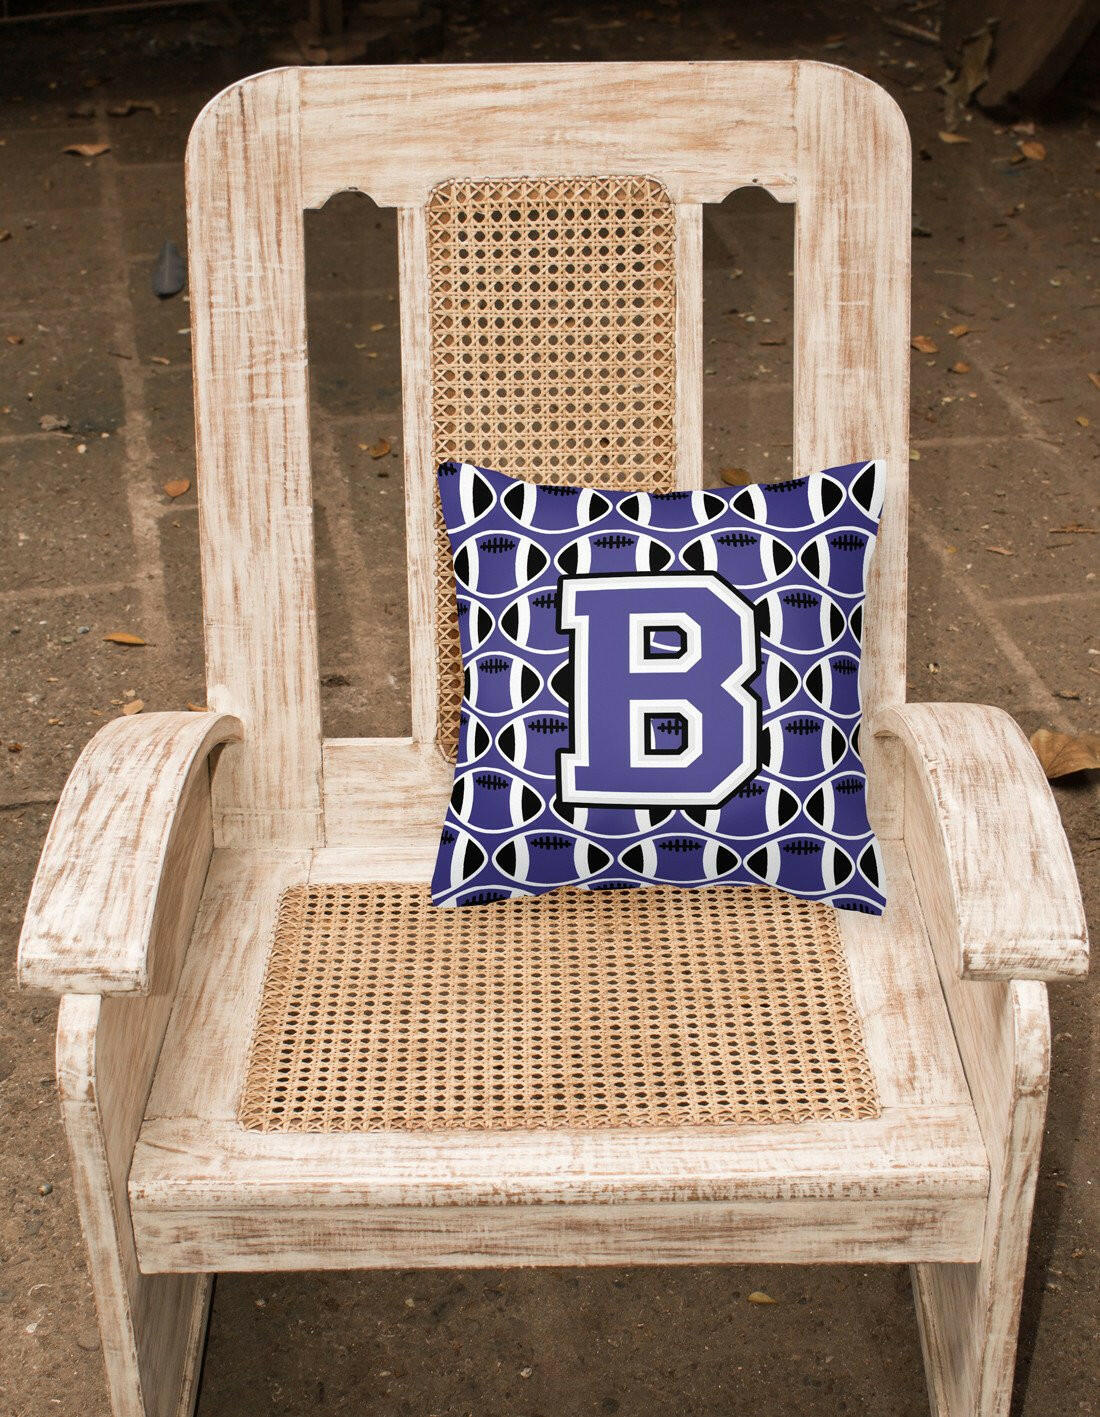 Letter B Football Purple and White Fabric Decorative Pillow CJ1068-BPW1414 by Caroline's Treasures